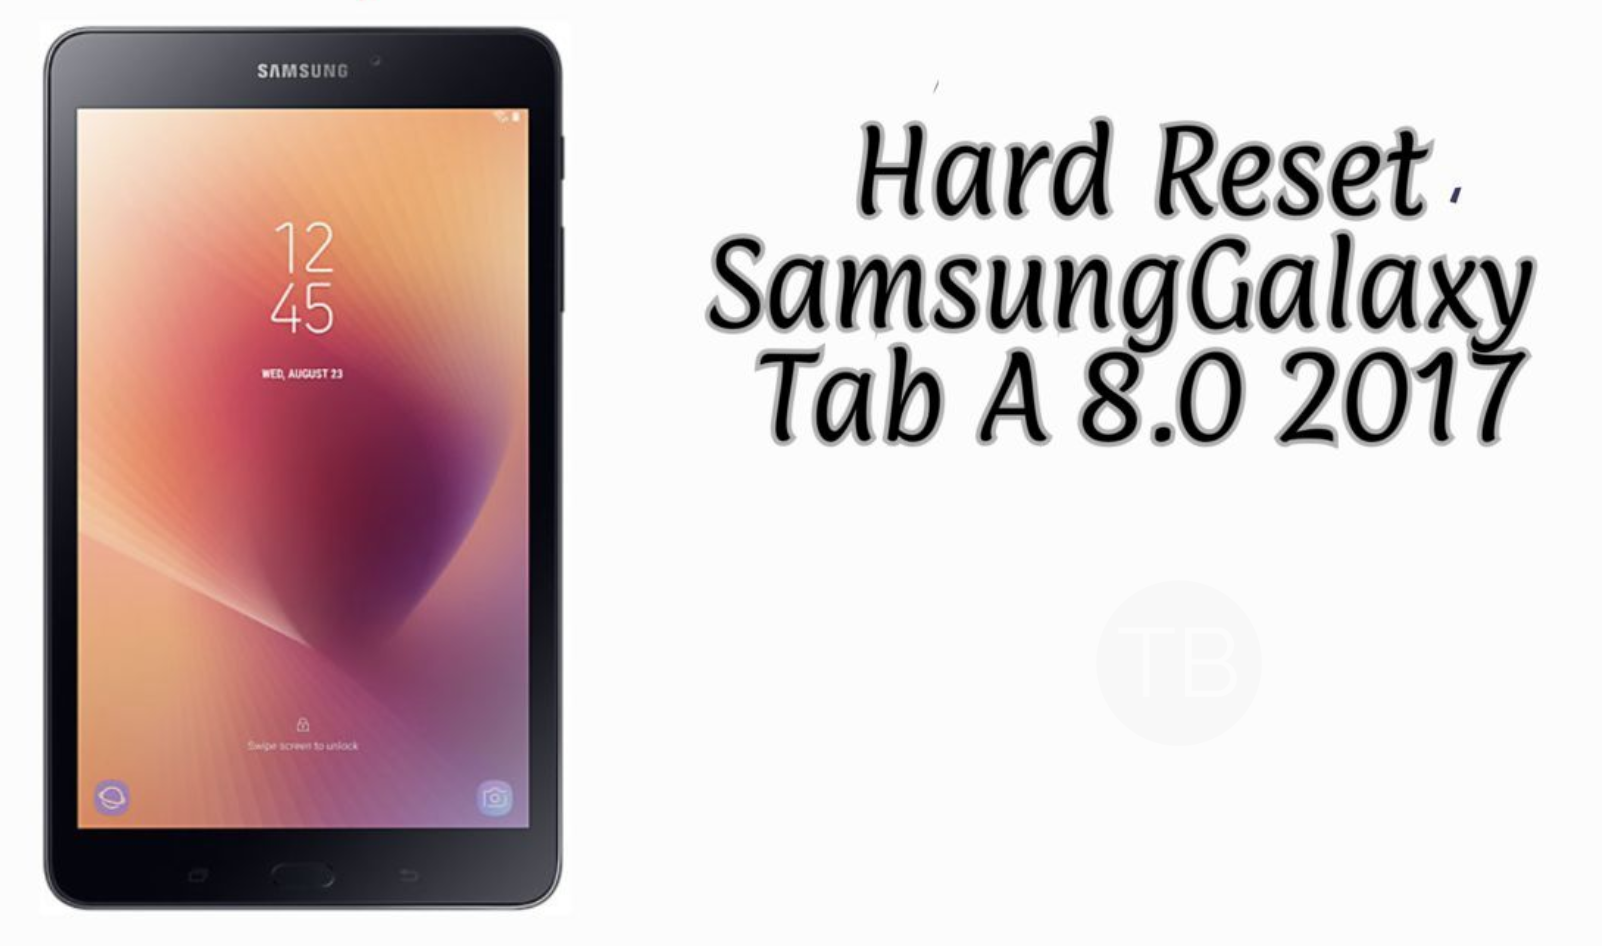 How to Hard Reset Samsung Galaxy Tab A 21.21 22117  TechBeasts